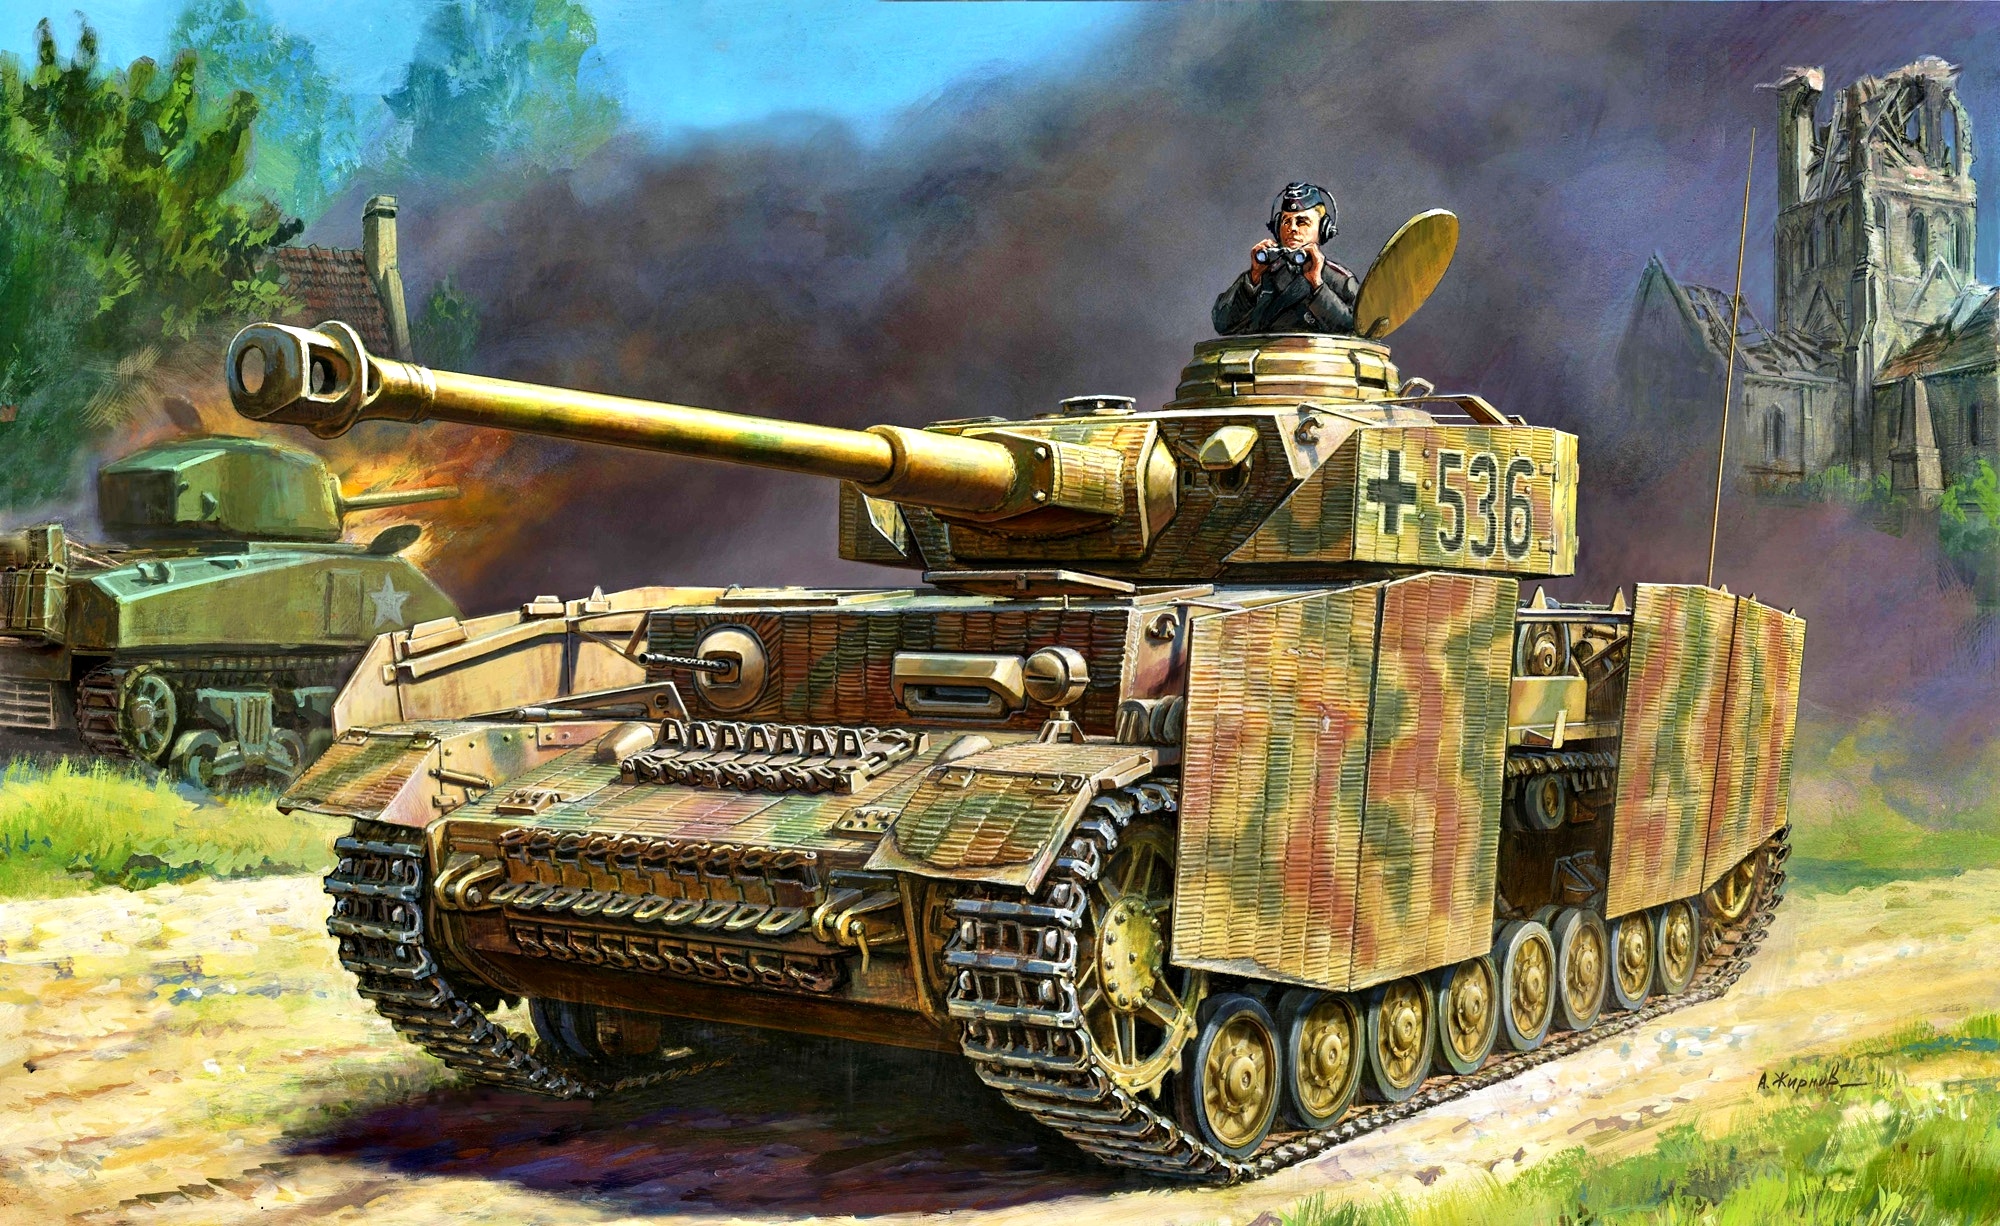 Немецкий танк pz. Танк Panzer 4 Ausf.h. Сборная модель zvezda немецкий средний танк t-IV (H) (3620) 1:35. PZ 4 Ausf h звезда. Немецкий танк PZ 4.